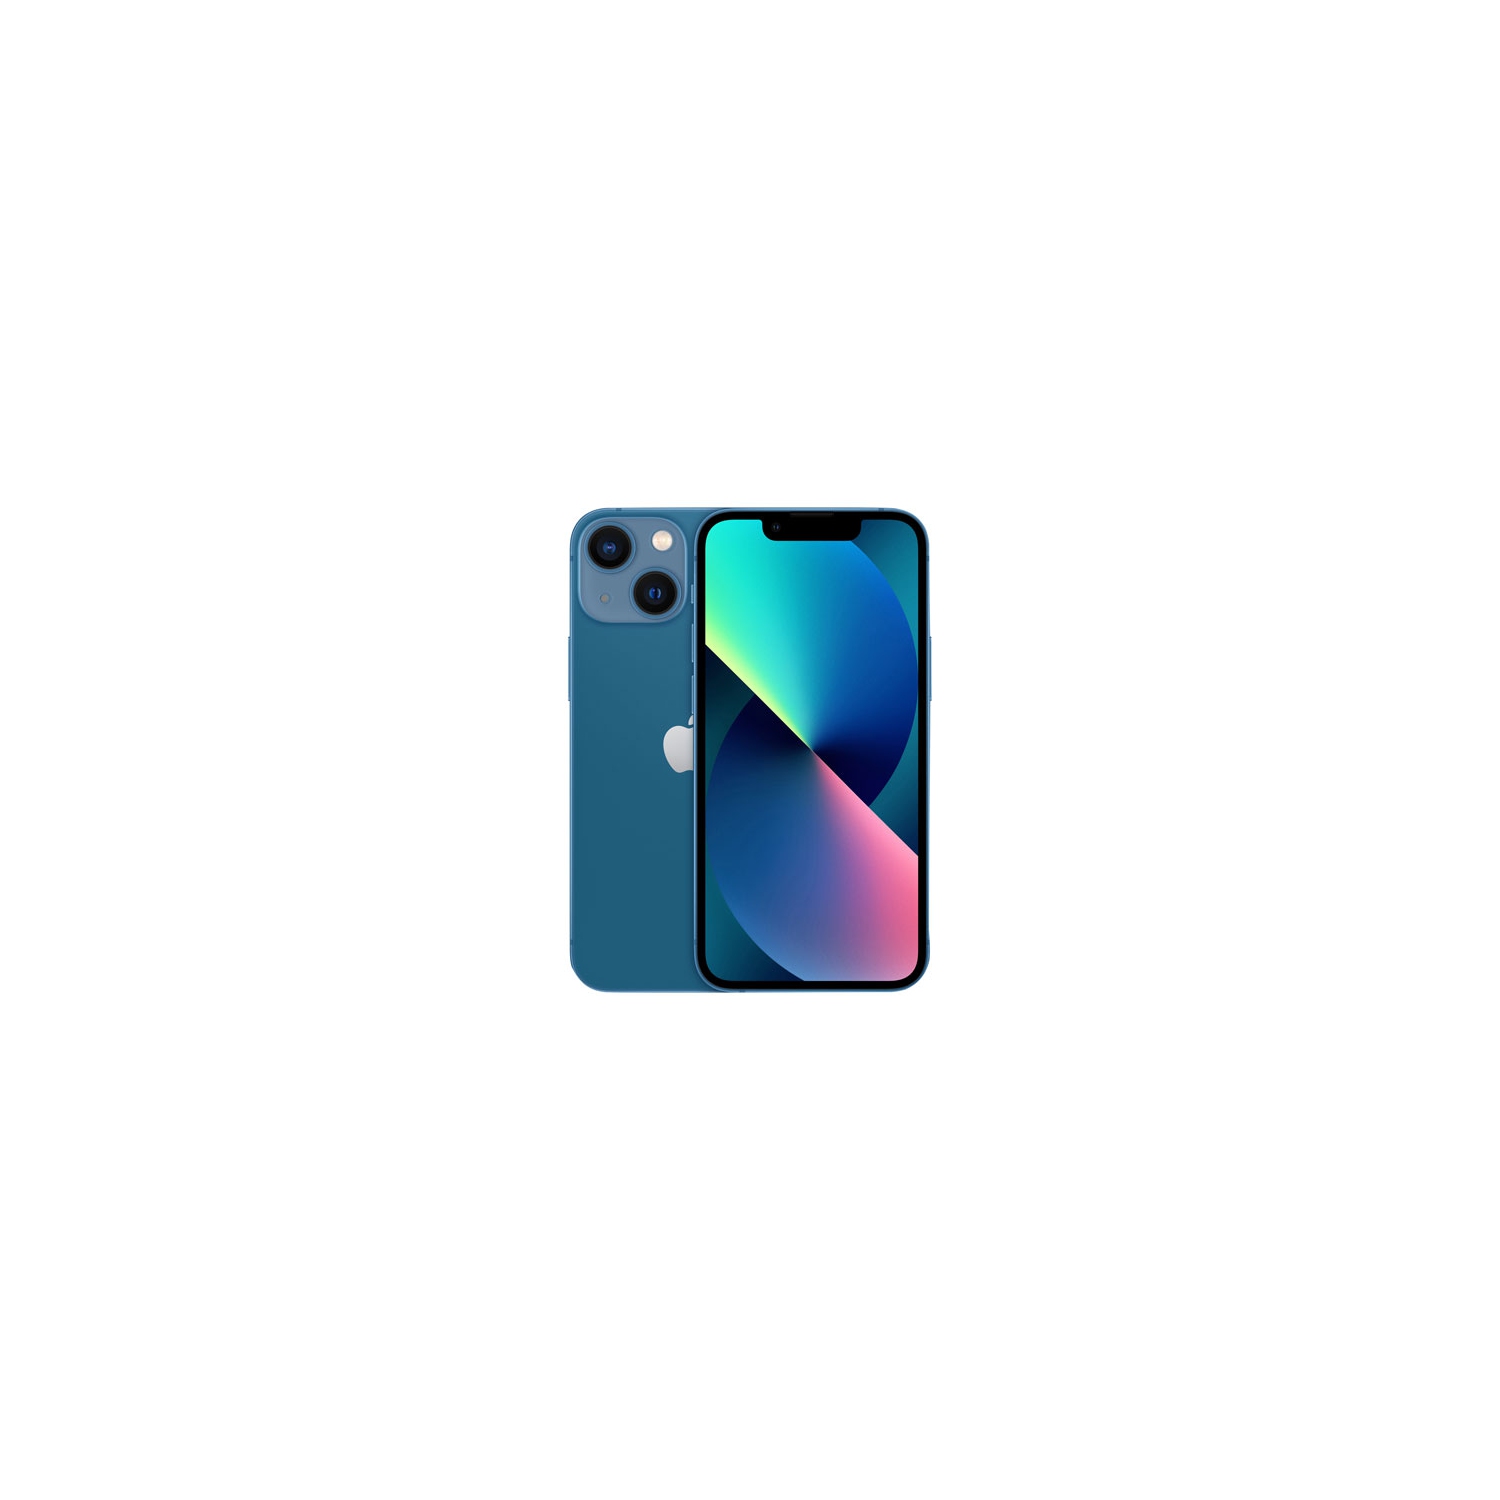 Apple iPhone 13 mini 128GB - Blue - Unlocked - Open Box